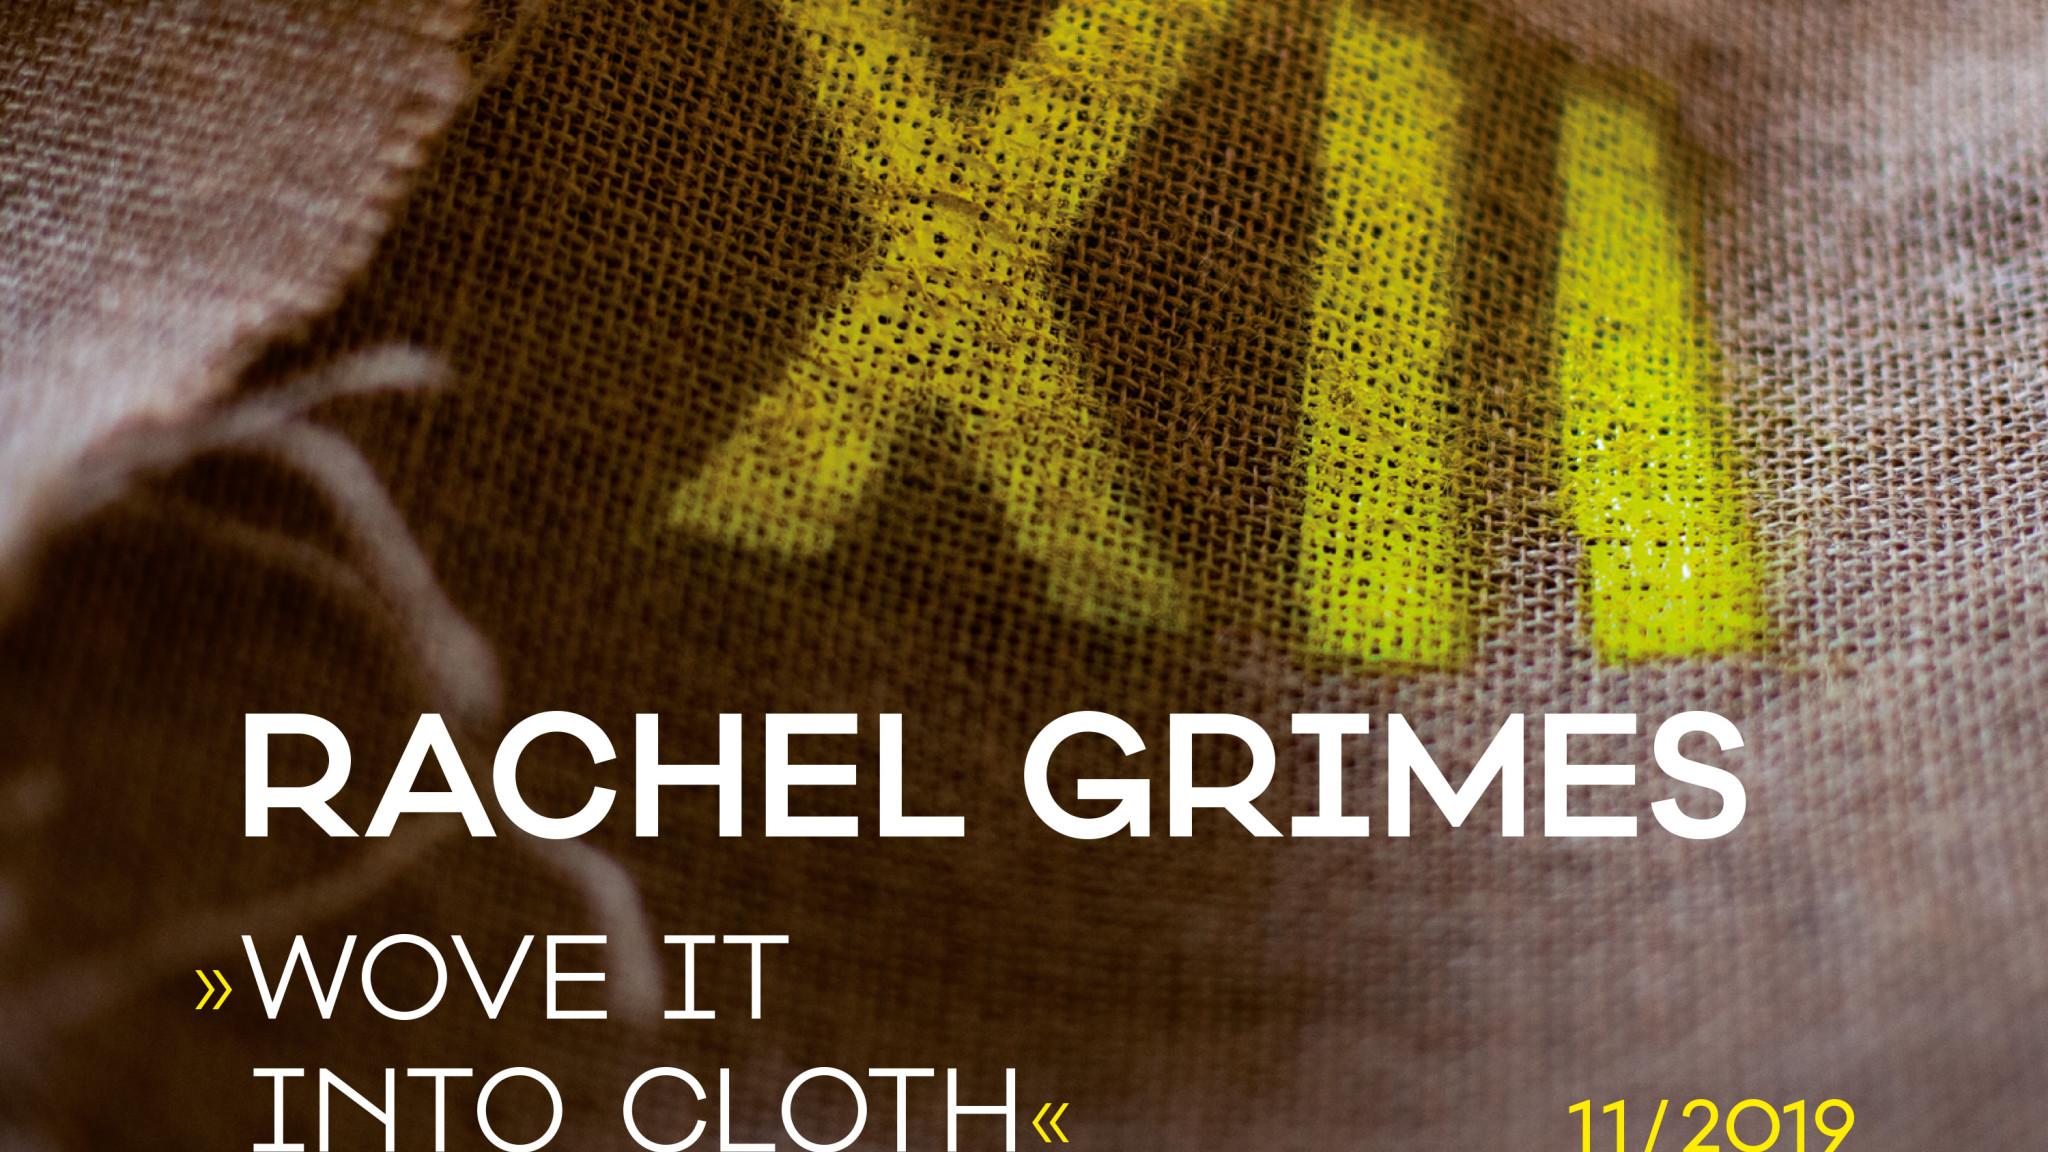 Project 12 / 11 - Wove it into cloth / Rachel Grimes